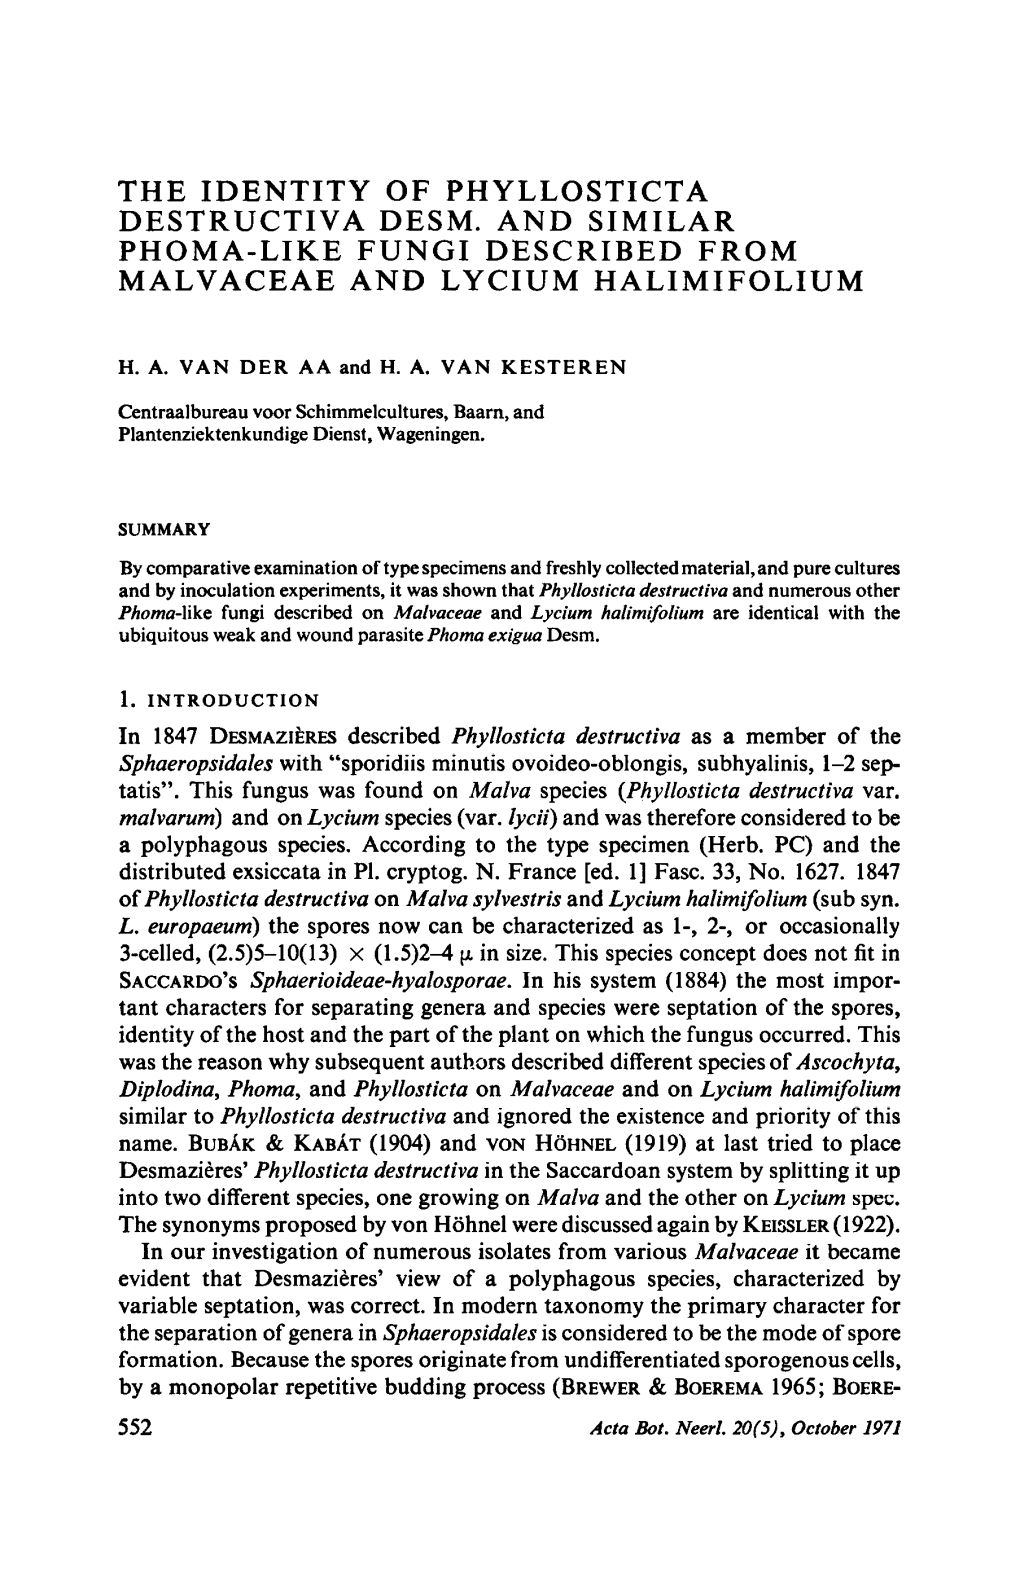 The Identity of Phyllosticta Destructiva Desm. and Similar Phoma-Like Fungi Described from Malvaceae and Lycium Halimifolium